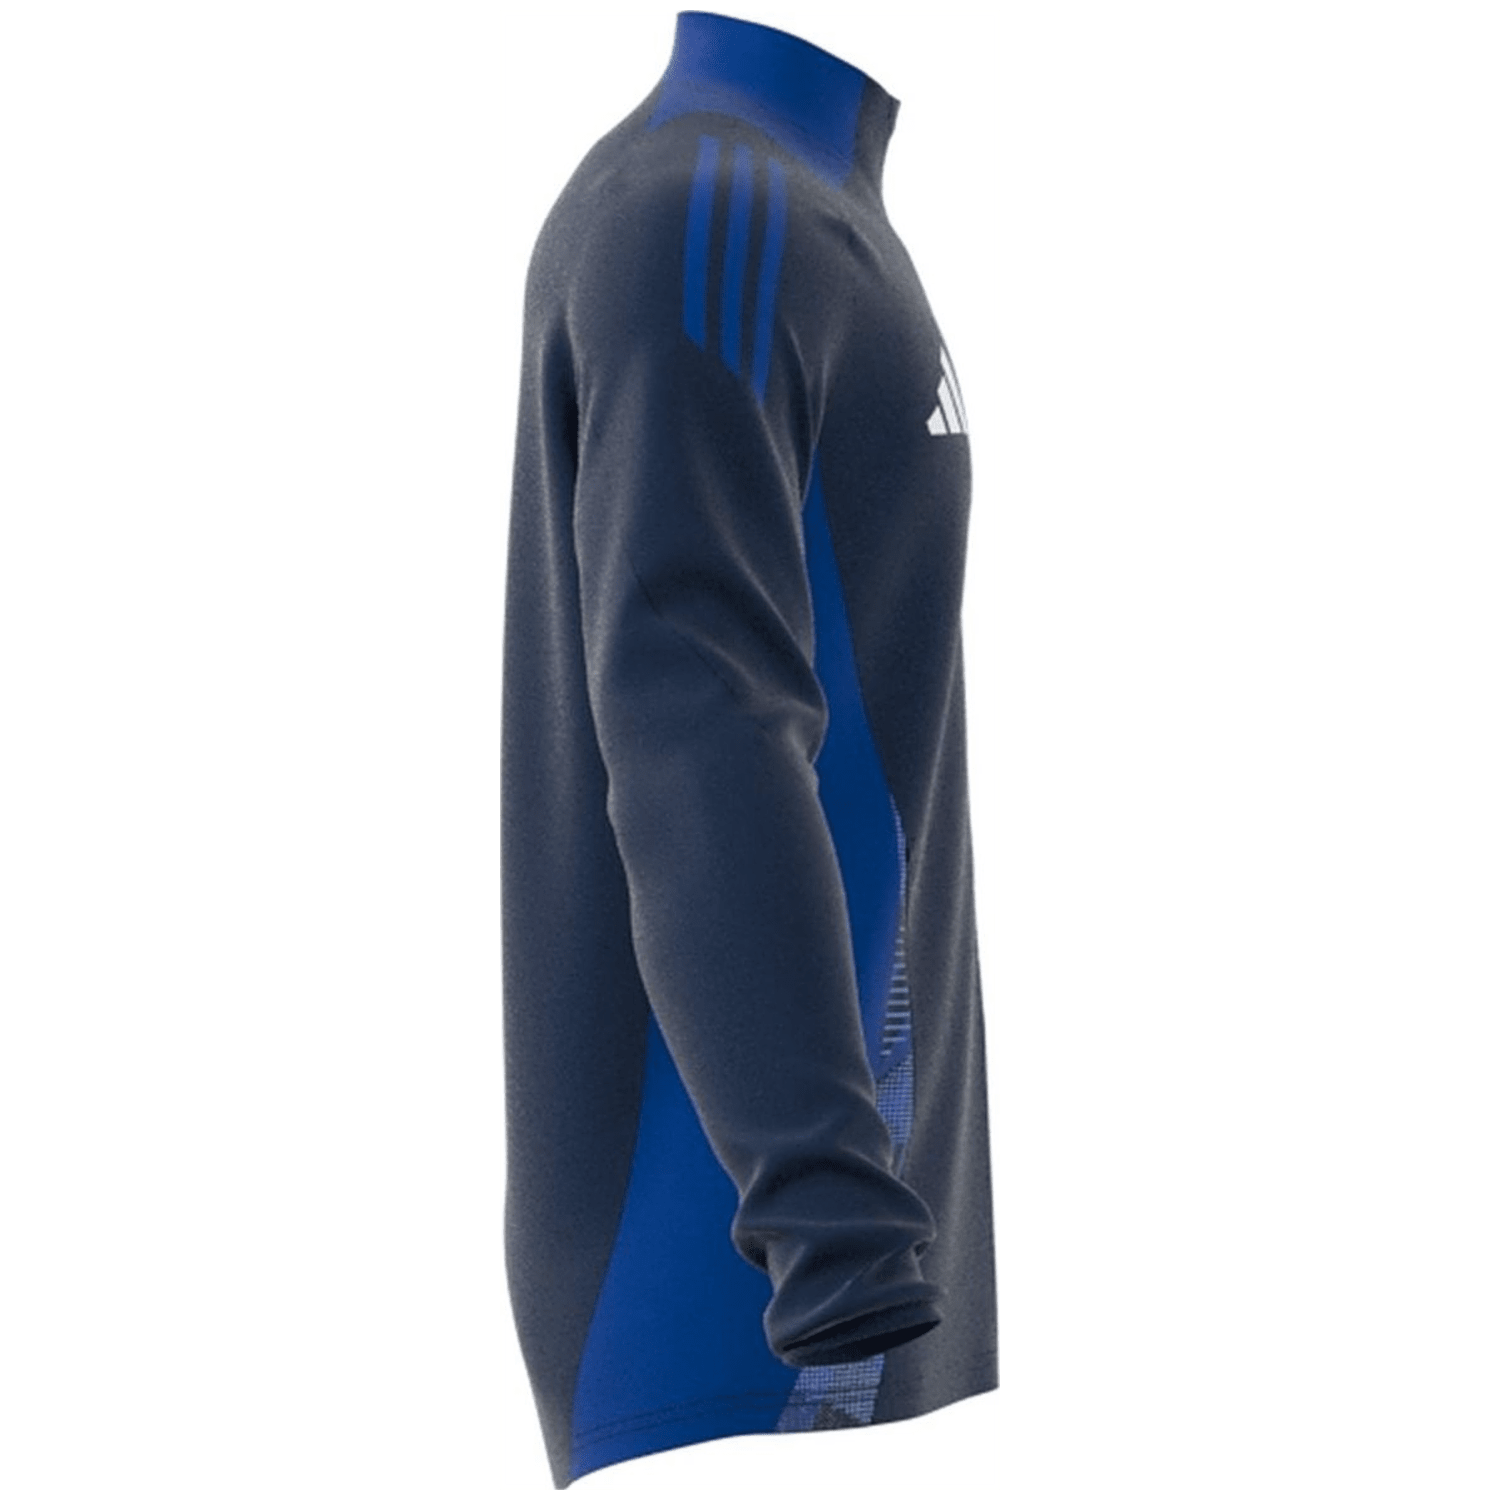 Adidas Tiro24 Competition Training Jacket Herren